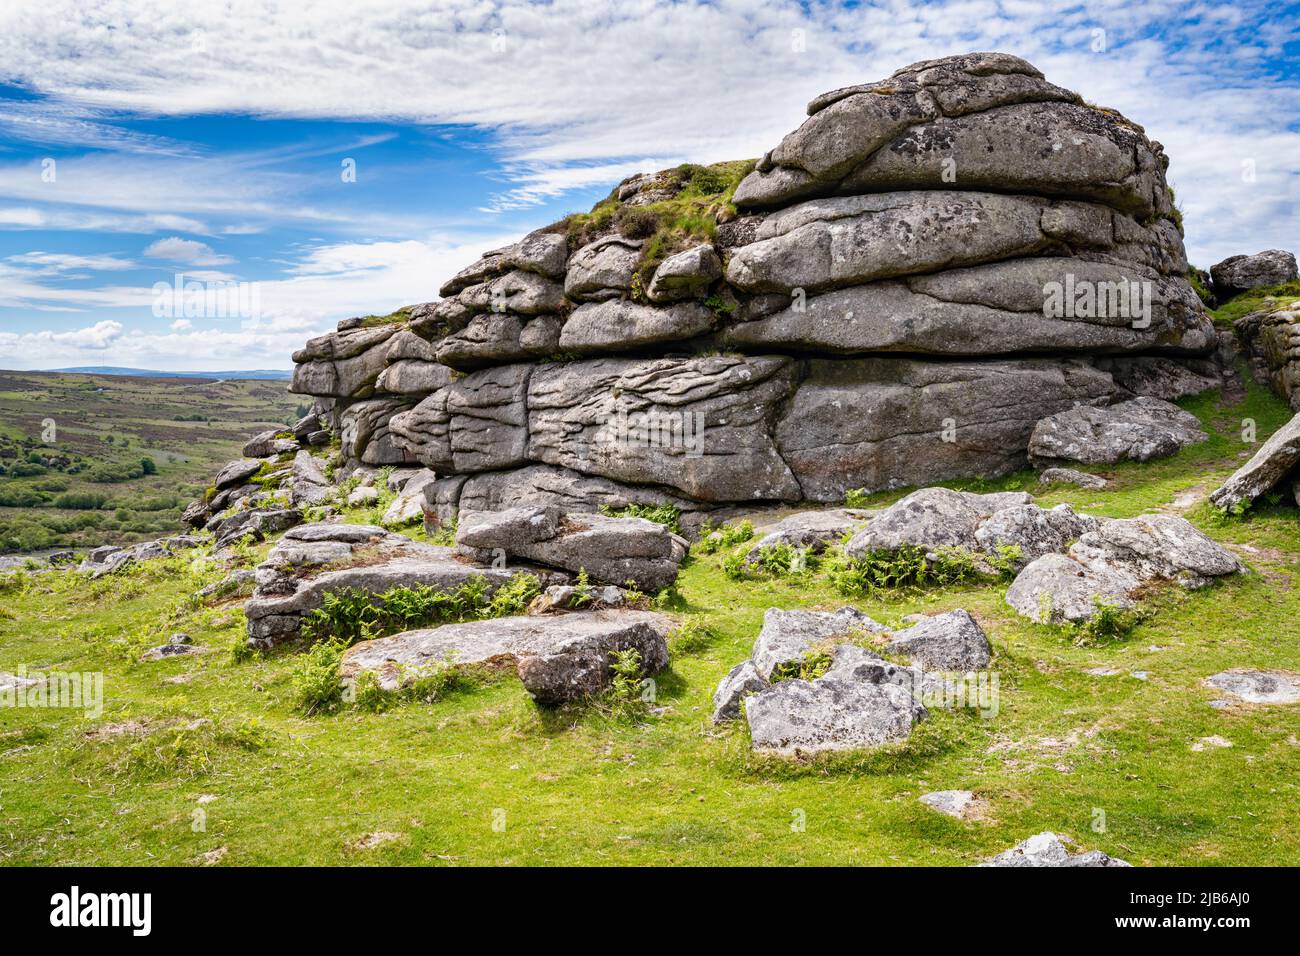 One of several granite outcrops at Emsworthy Rocks, near Haytor in Dartmoor National Park, Devon, UK. Stock Photo